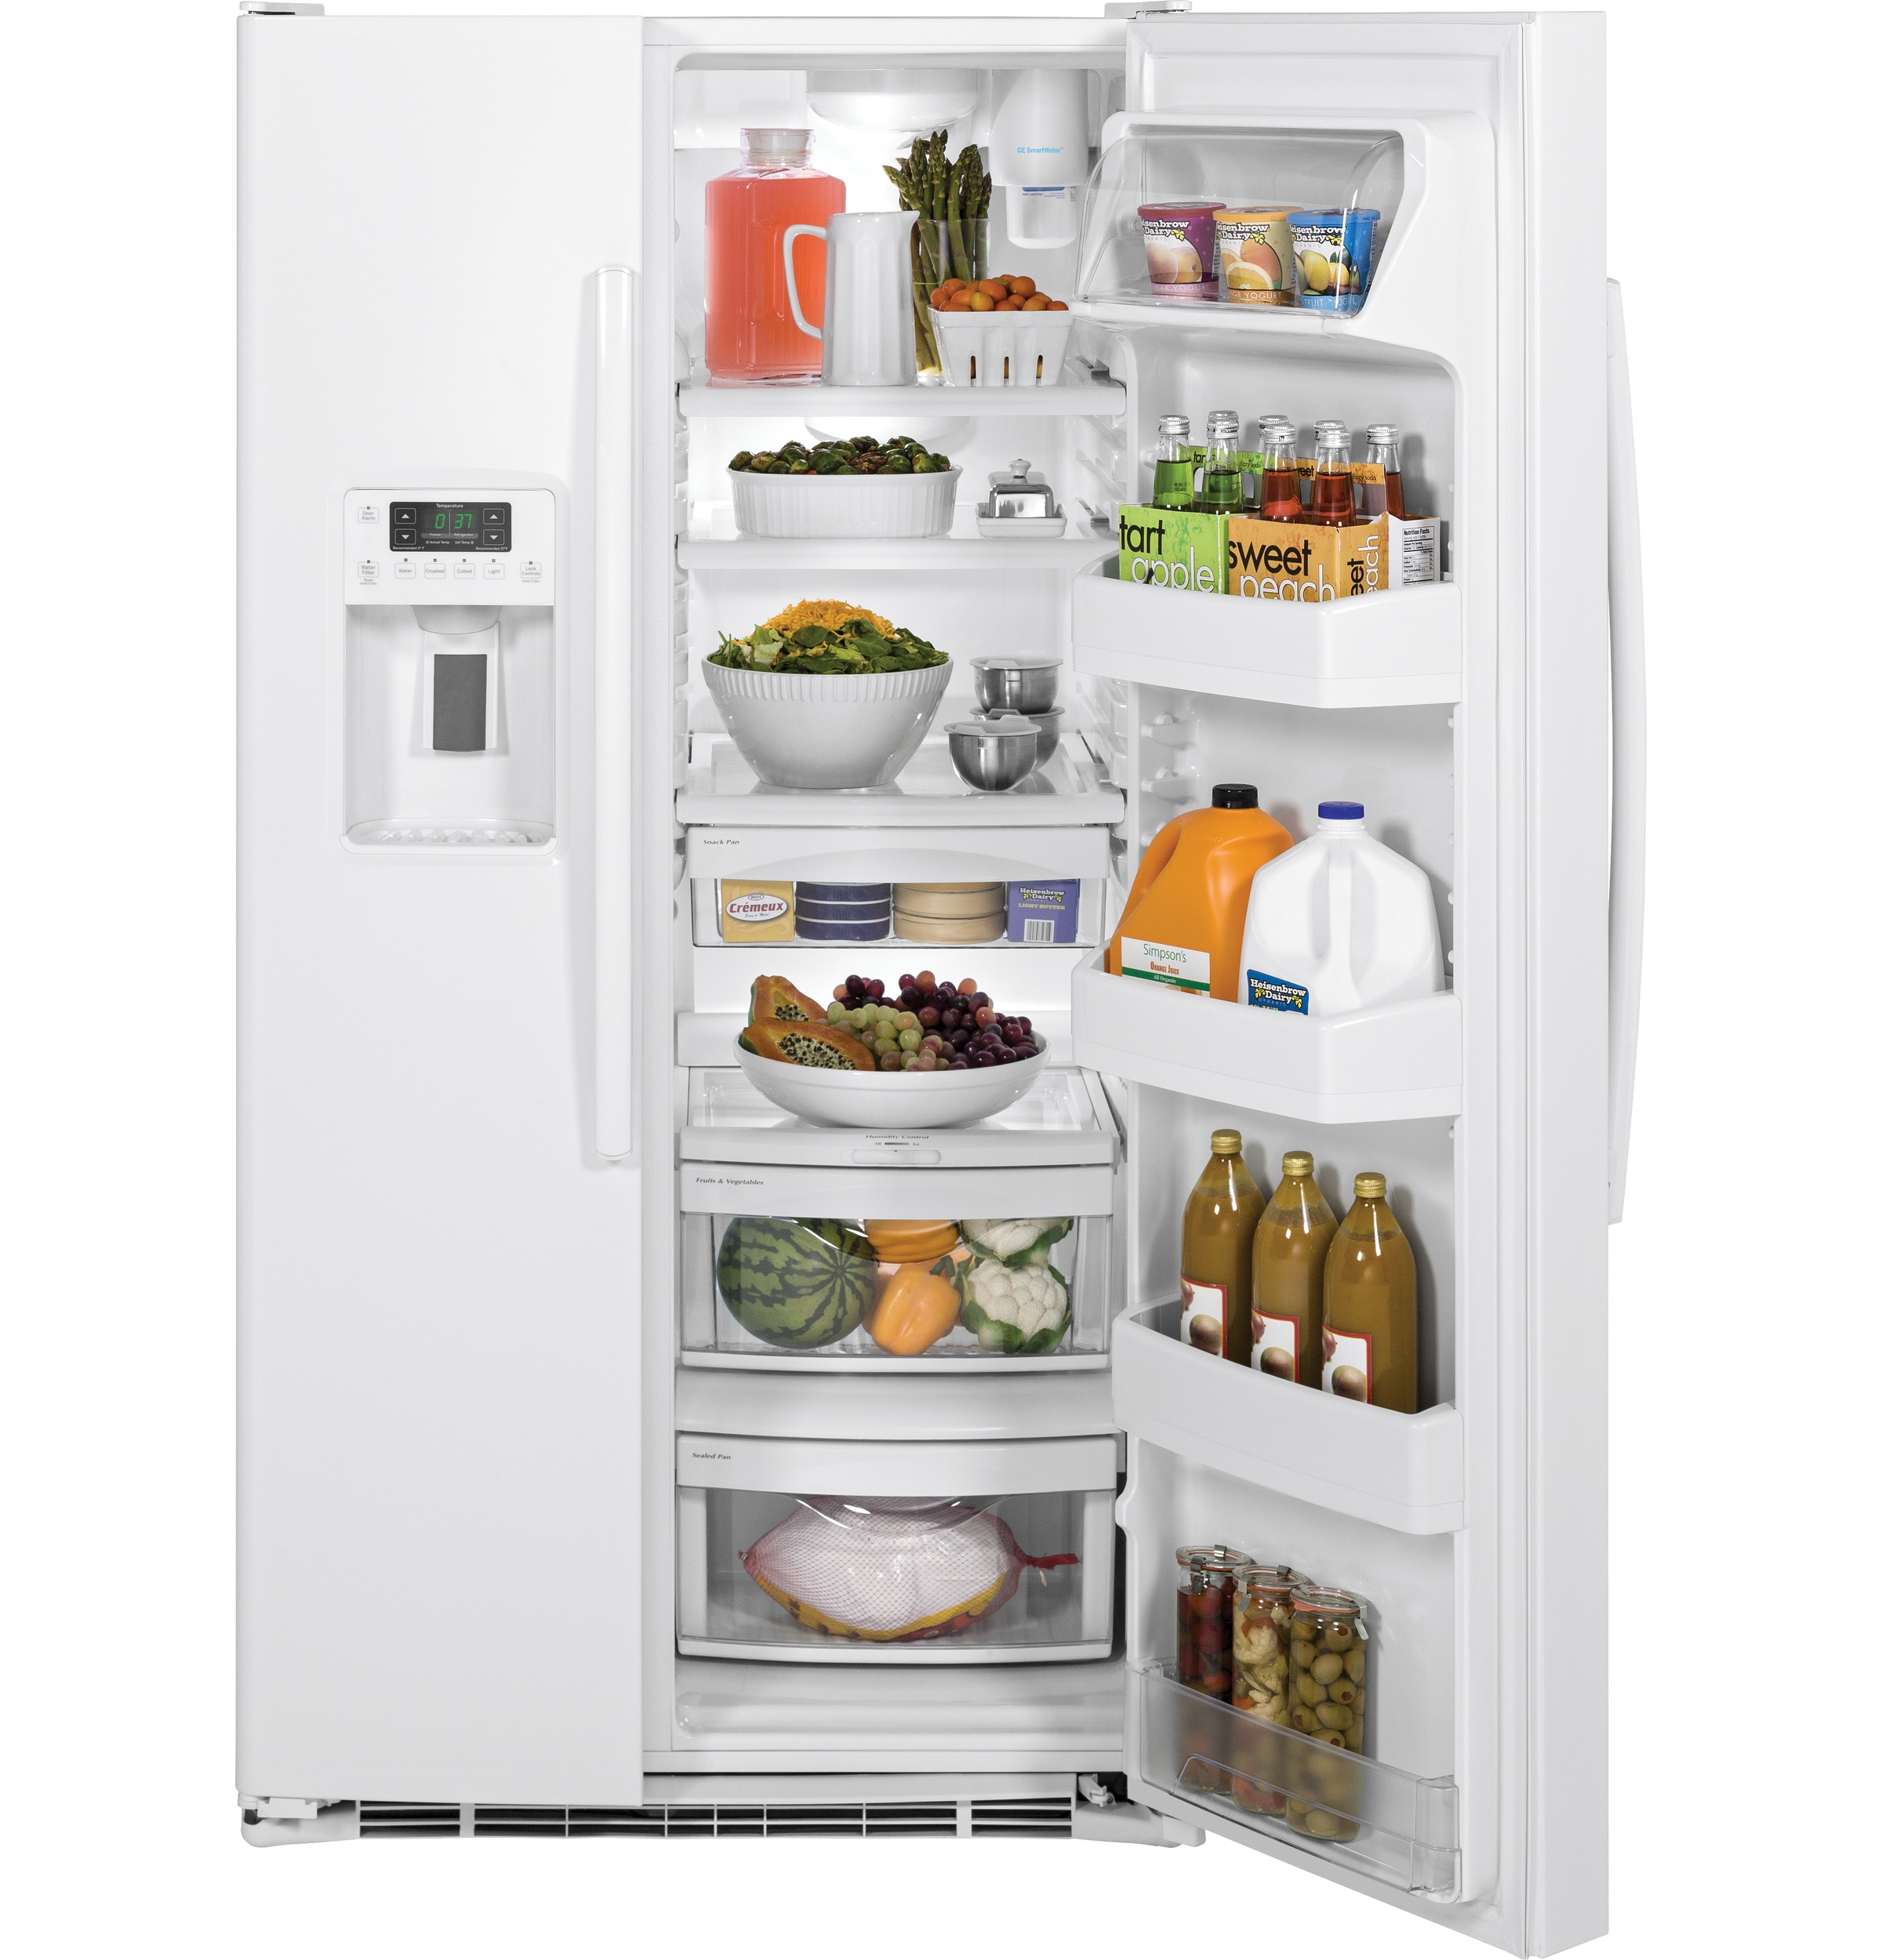  GE - 25.4 Cu. Ft. Side-by-Side Refrigerator